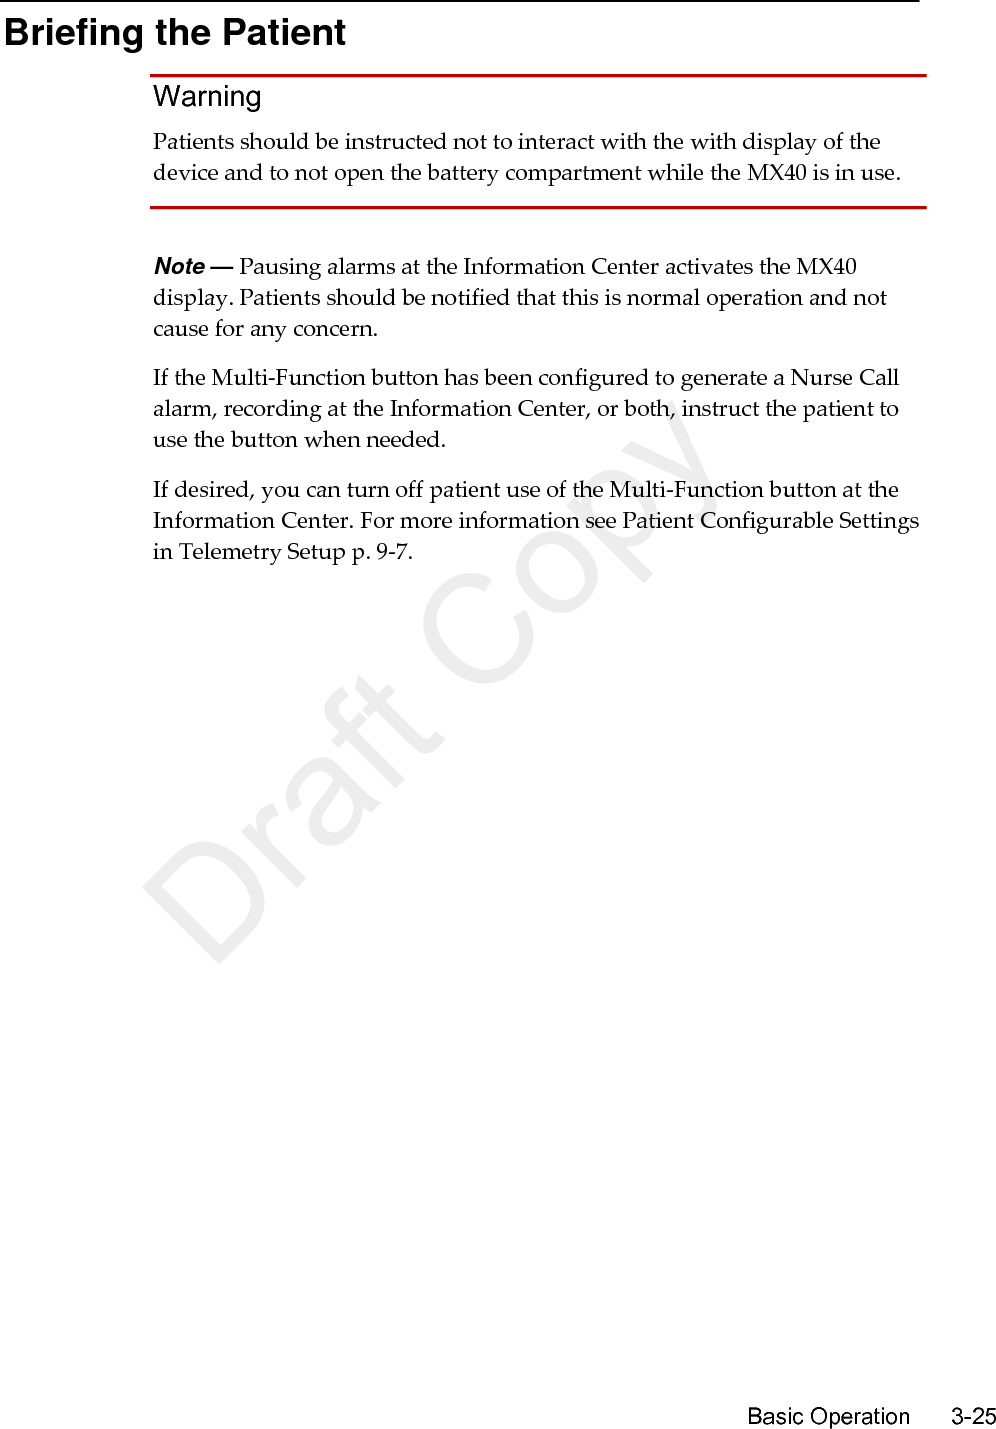    3-26    Basic Operation   Draft Copy